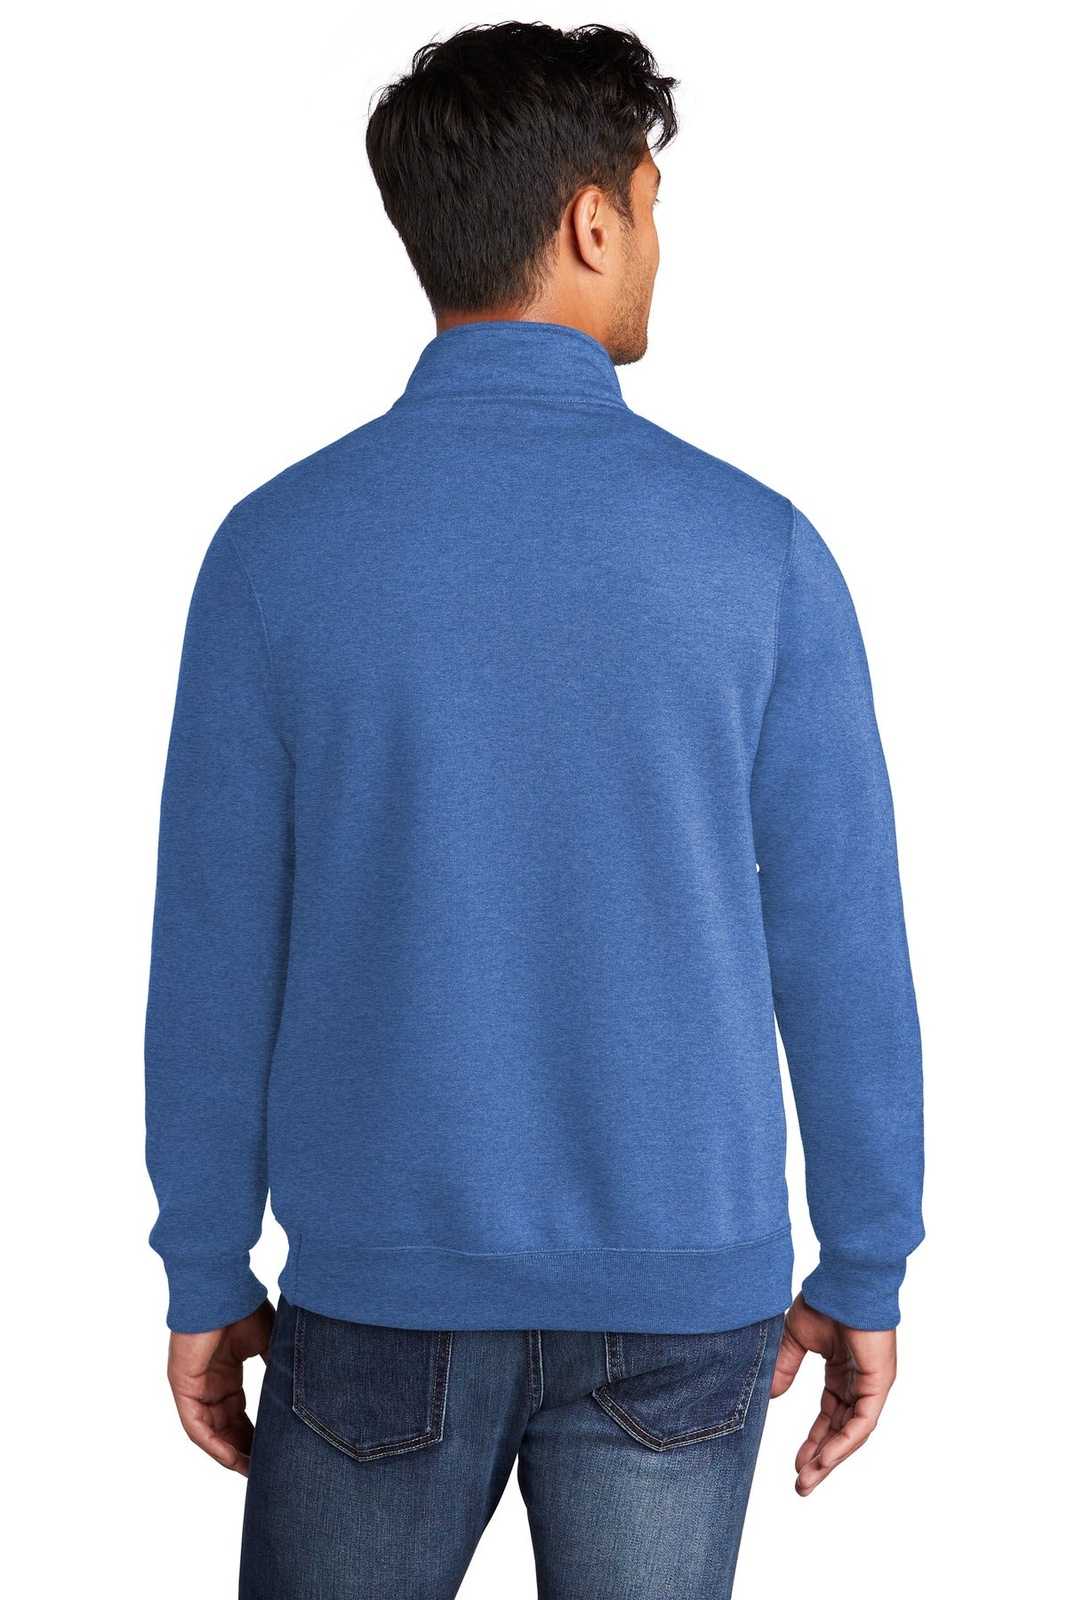 Port & Company PC78Q Core Fleece 1/4-Zip Pullover Sweatshirt - Heather Royal - HIT a Double - 1